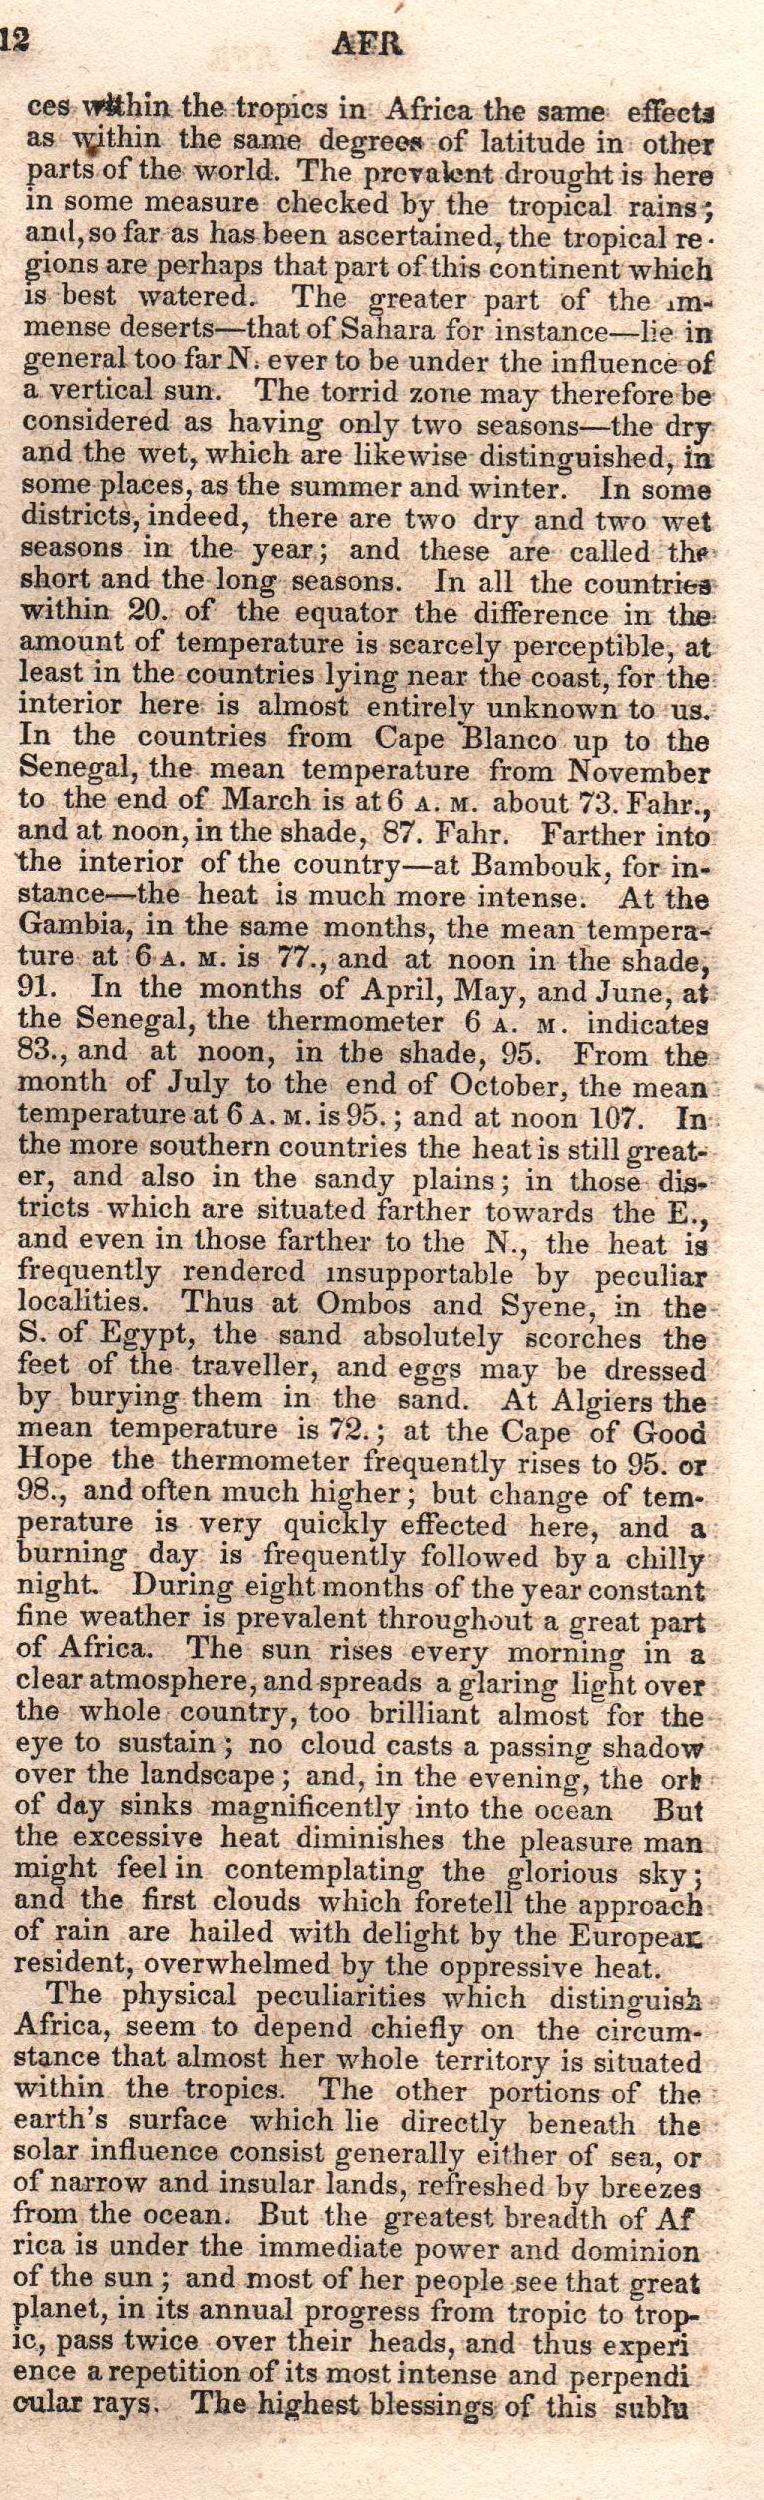 Brookes’ Universal Gazetteer (1850), Page 12 Right Column